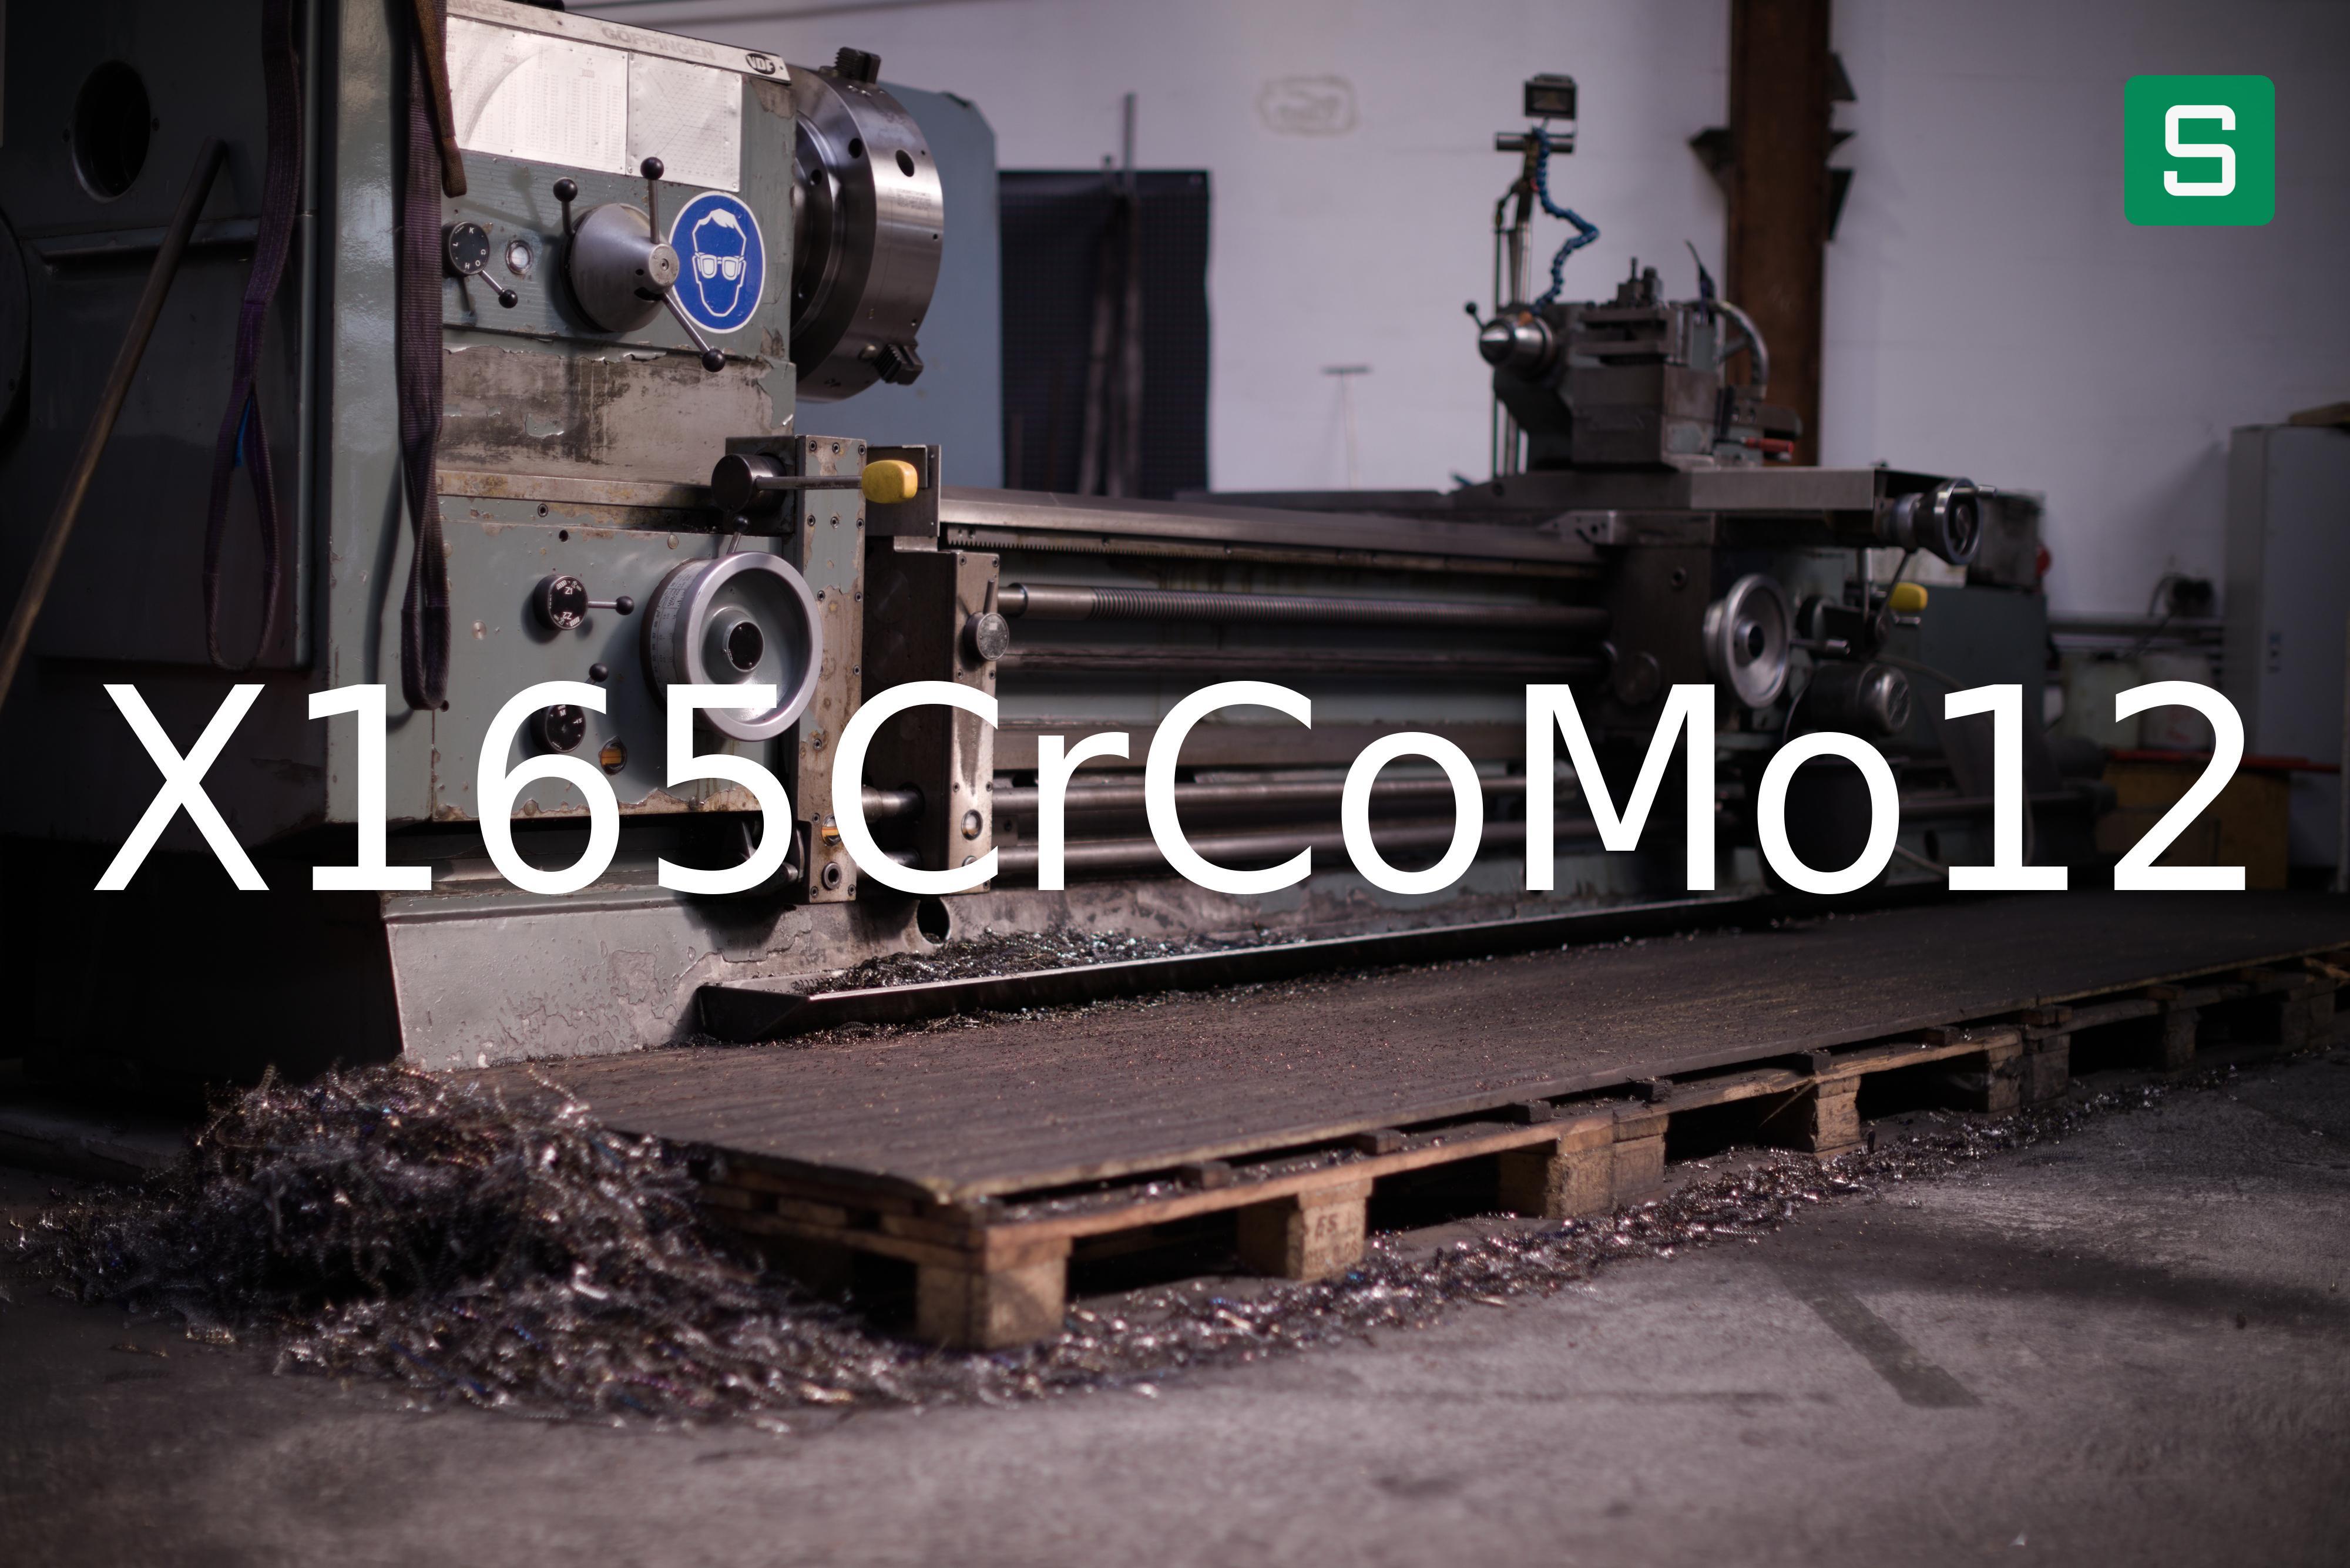 Steel Material: X165CrCoMo12